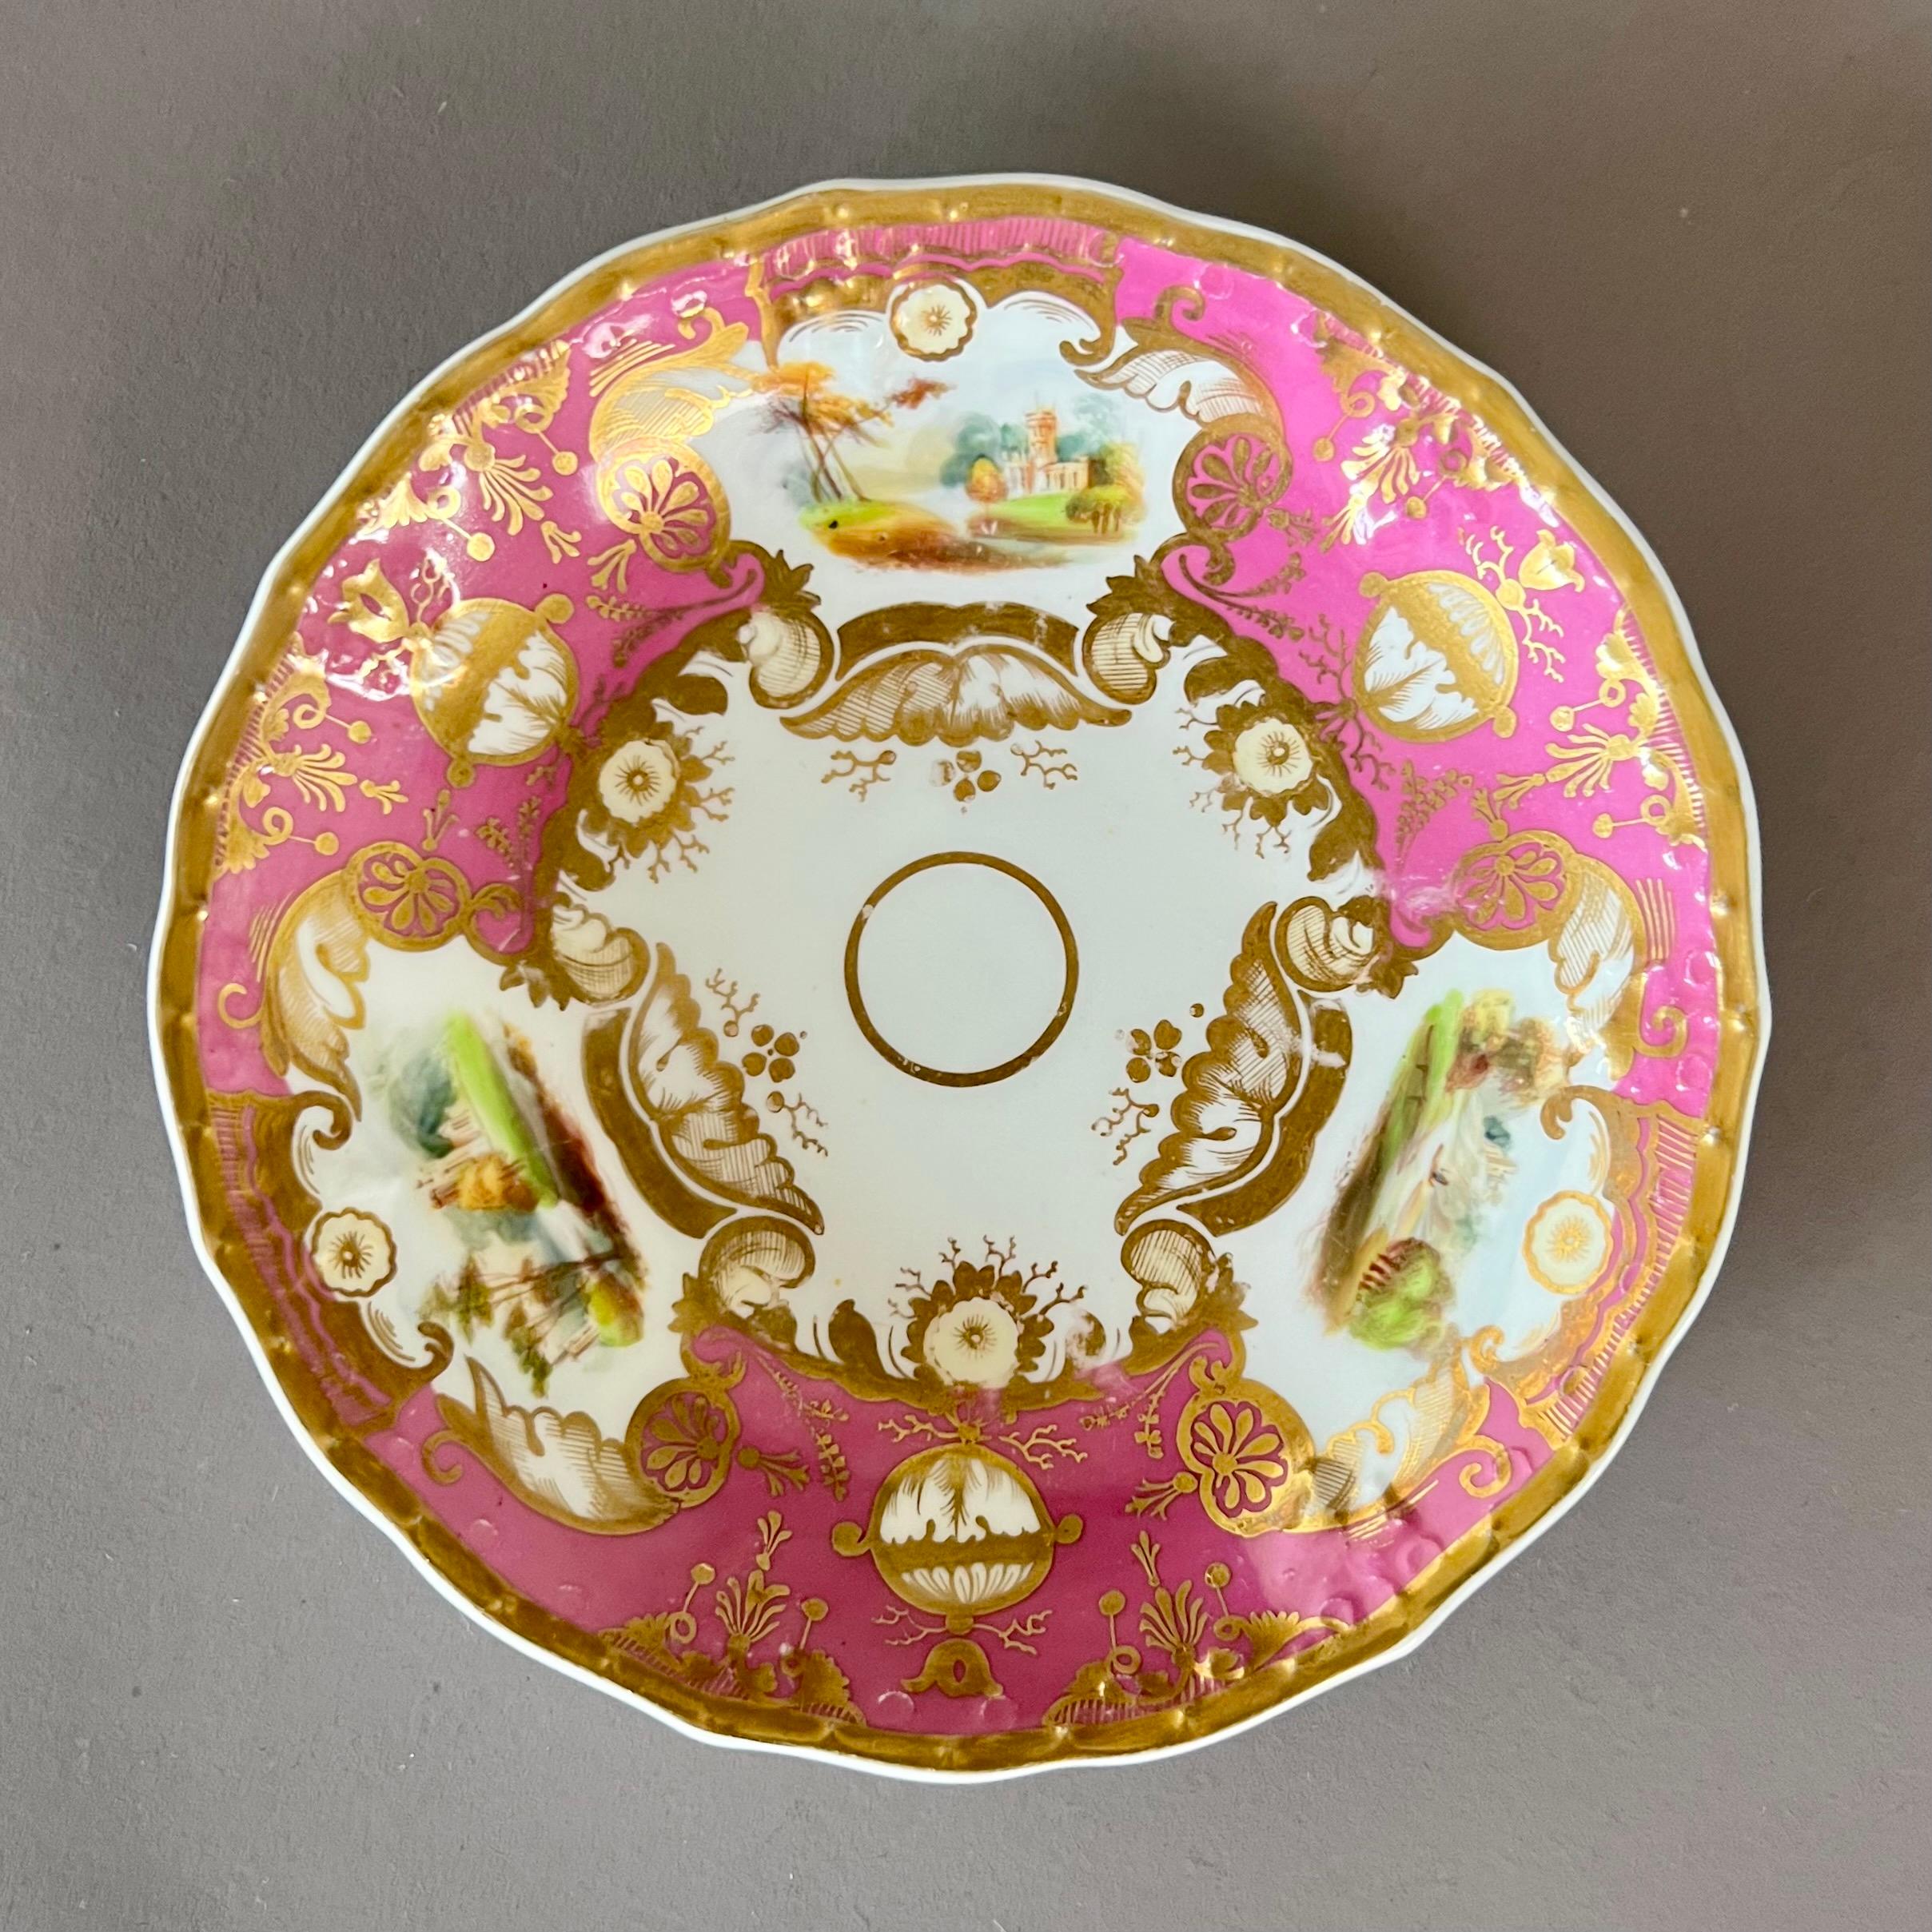 Hand-Painted Samuel Alcock Porcelain Teacup Trio, Pink, Gilt and Sublime Landscapes, ca 1827